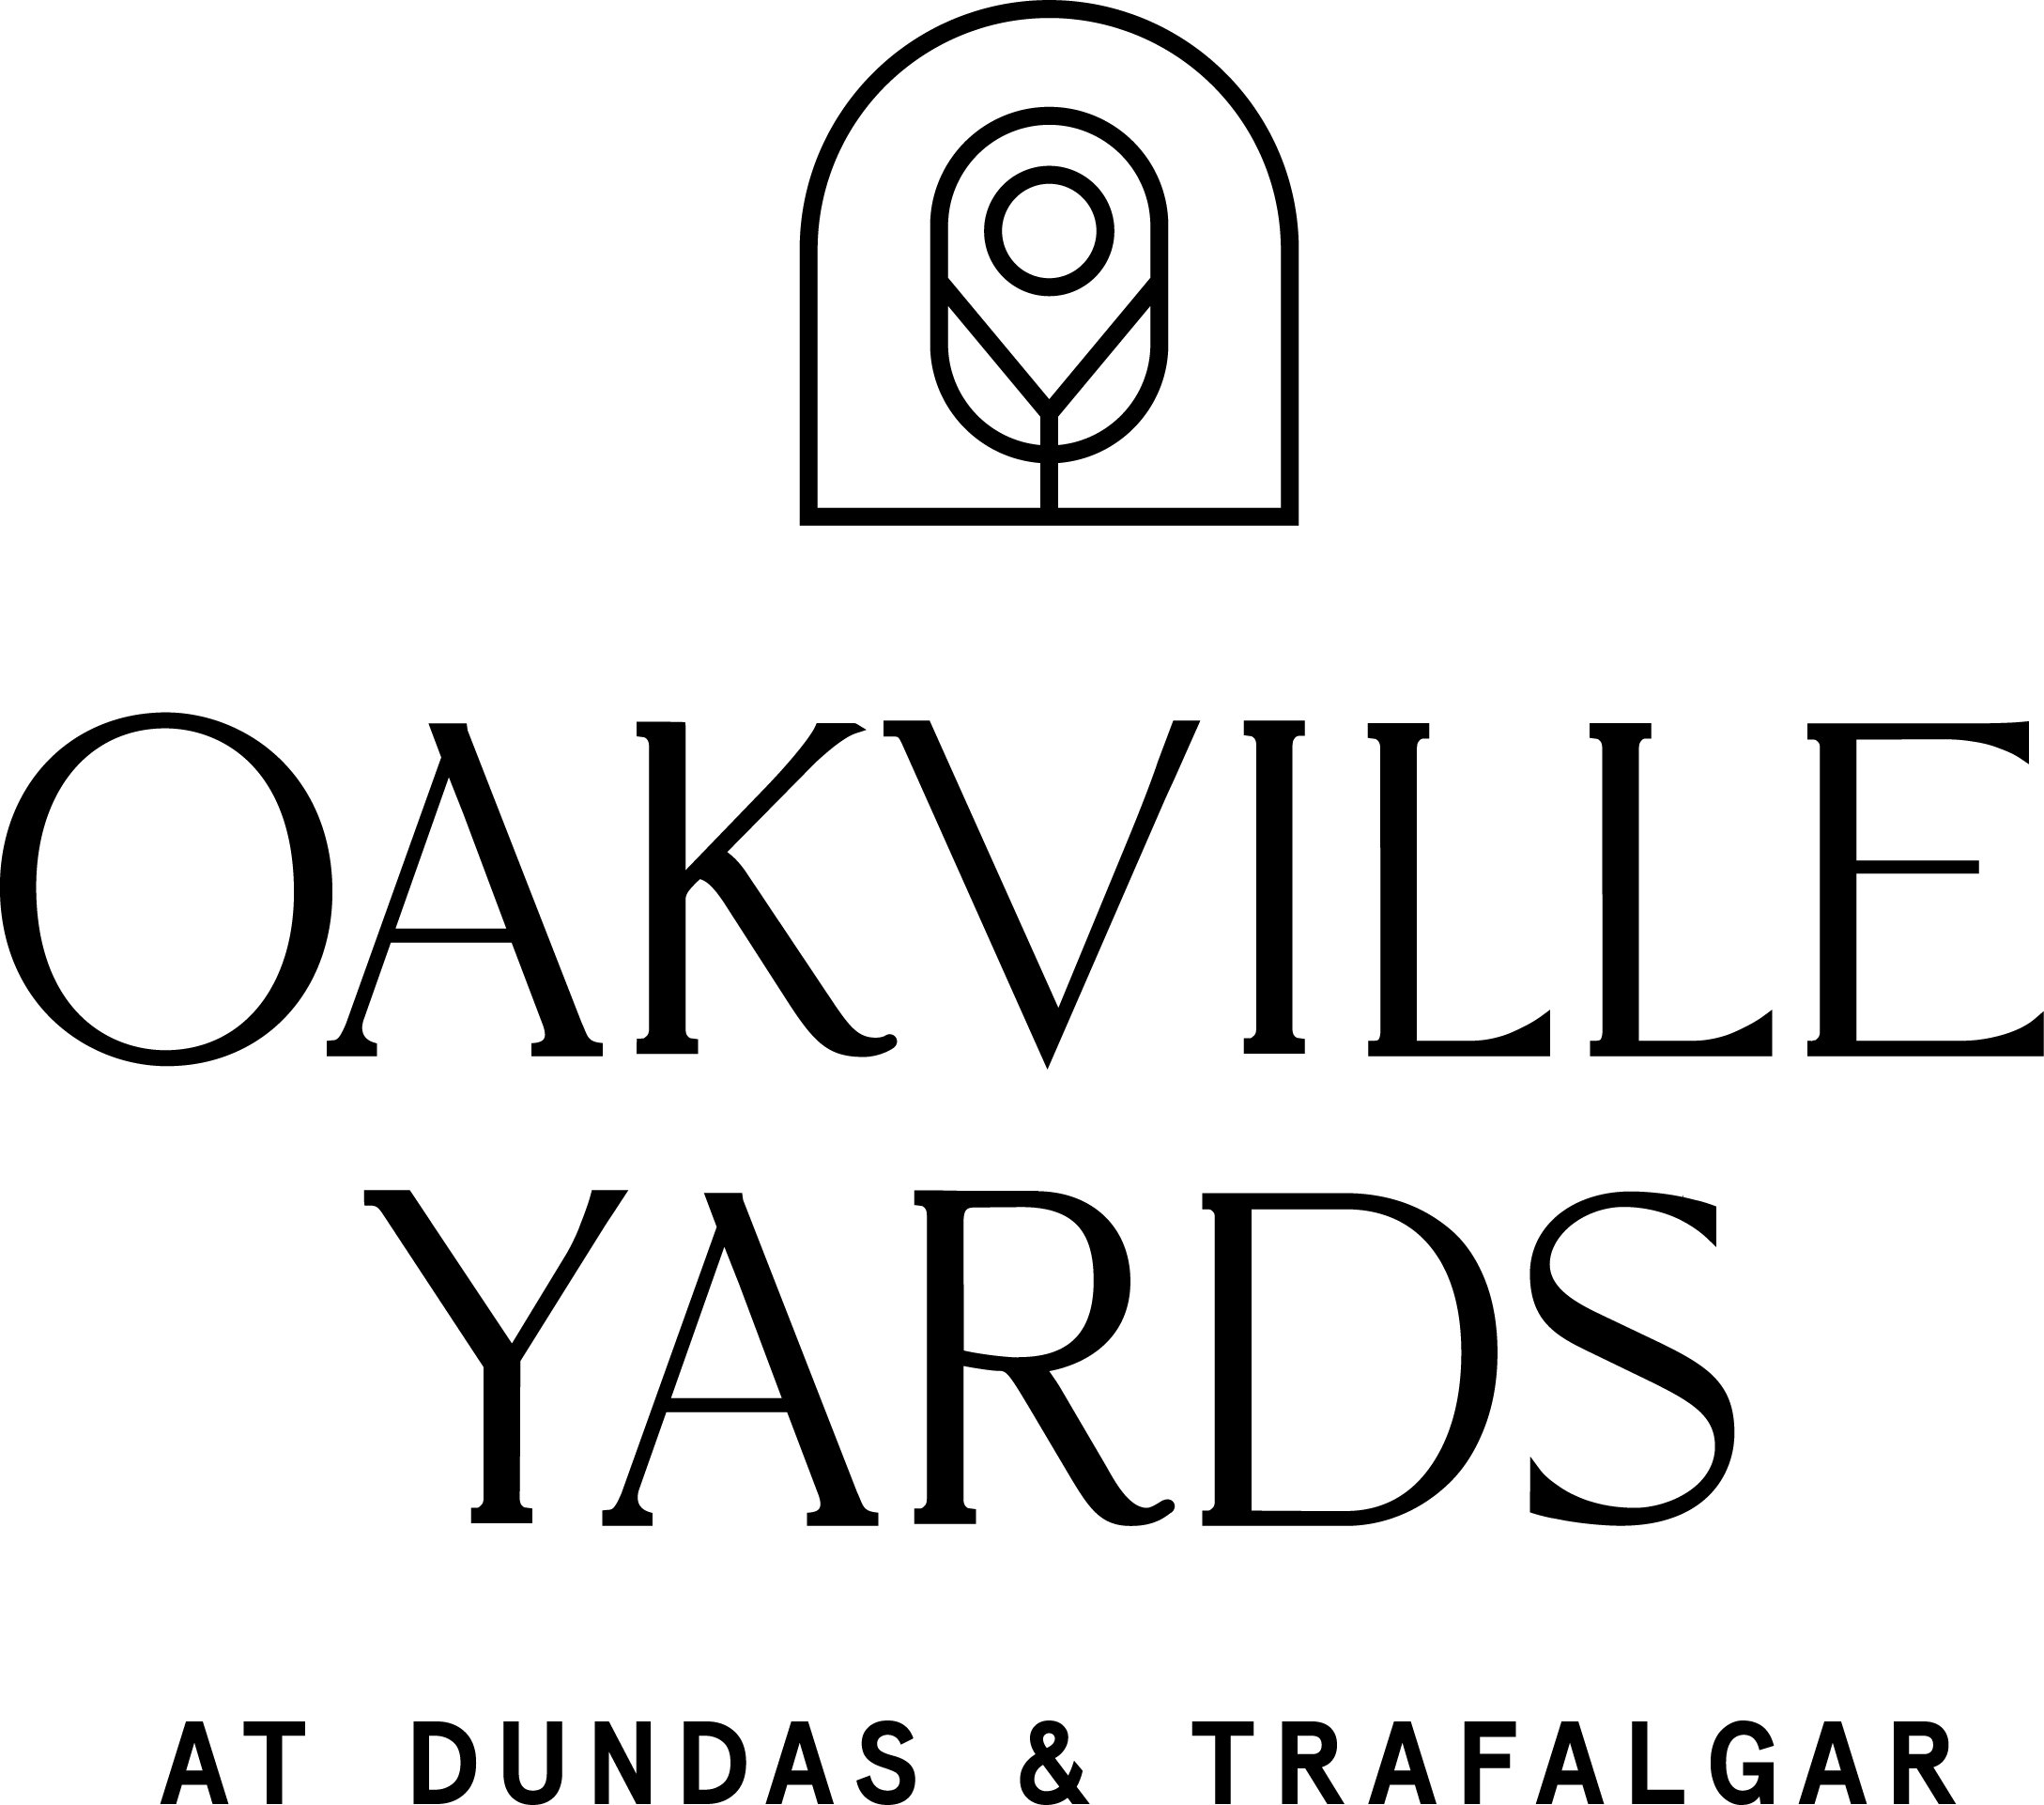 Oakville Yards logo with location at Dundas & Trafalgar.